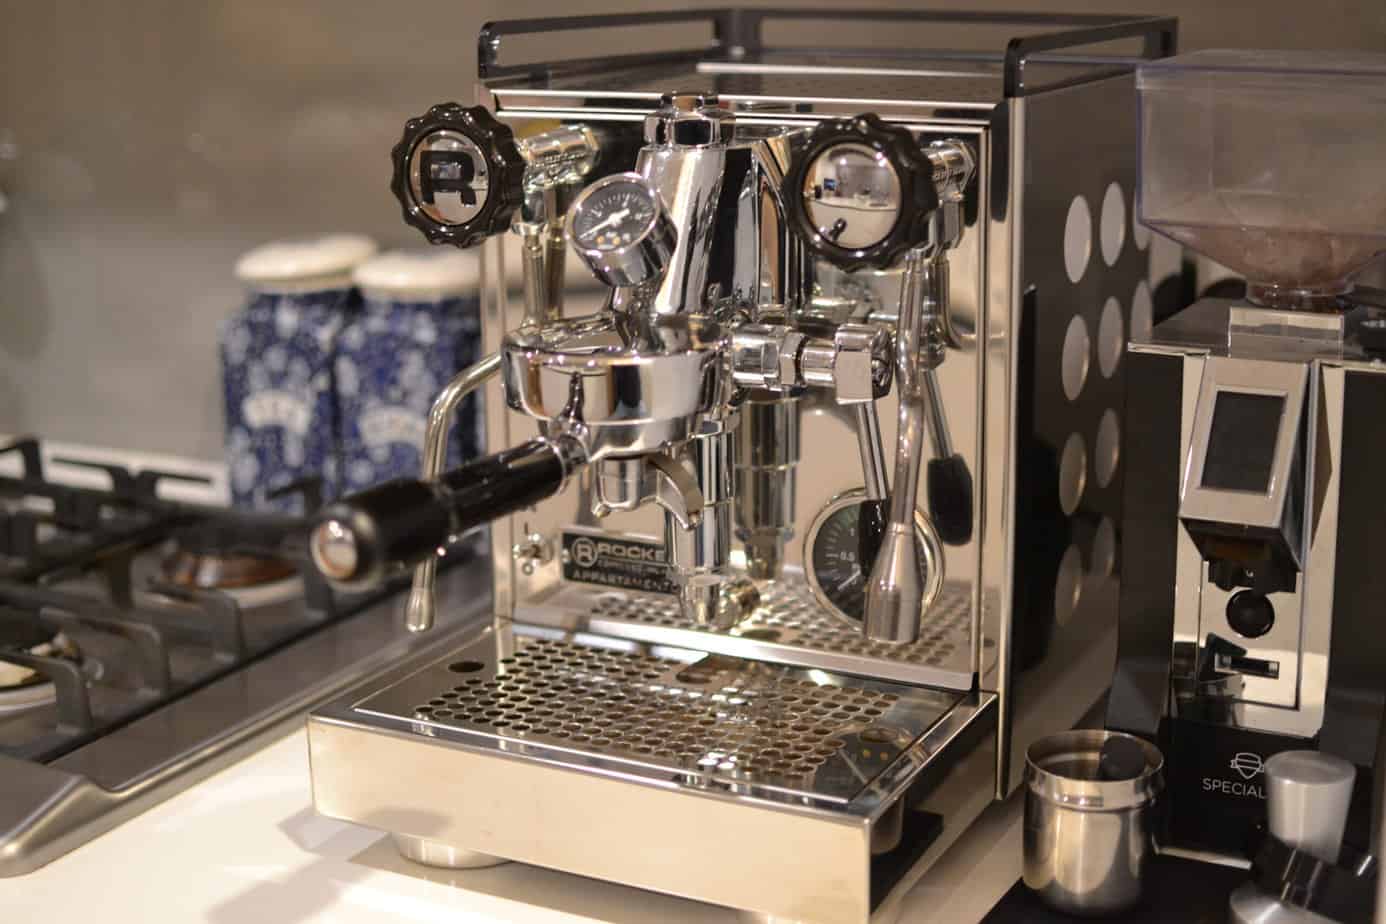 Apparatamento coffee machine at home